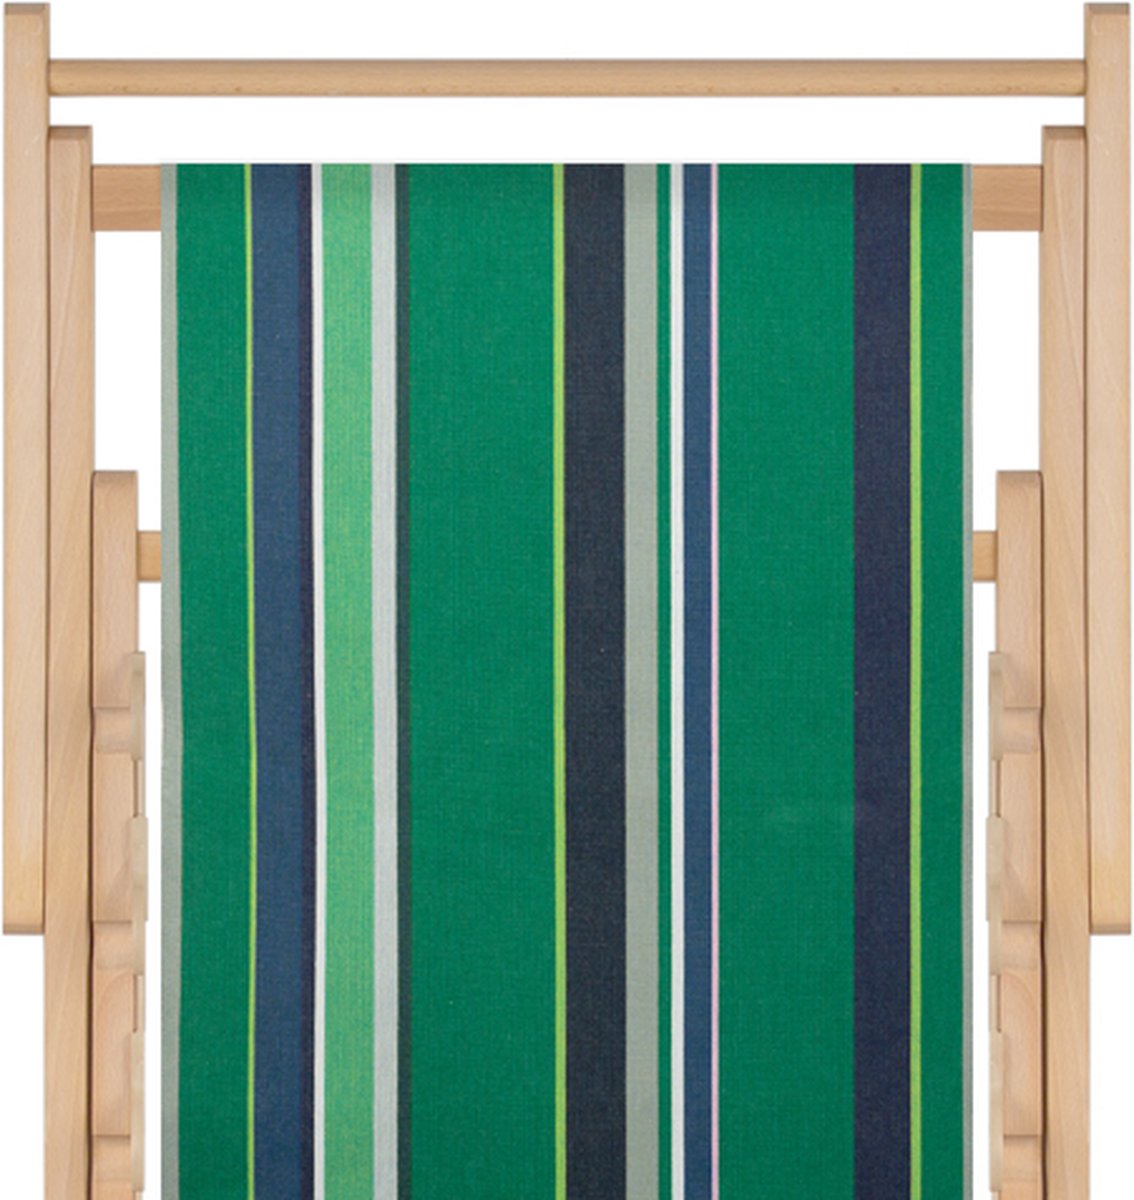 Houten strandstoel met hoogwaardige stof in katoen - massief beukehout - dubbelgeweven katoen Emeraude - opvouwbaar - verstelbaar in 3 standen - zonder armleuning - afneembare hoes - multicolour - strepenpatroon